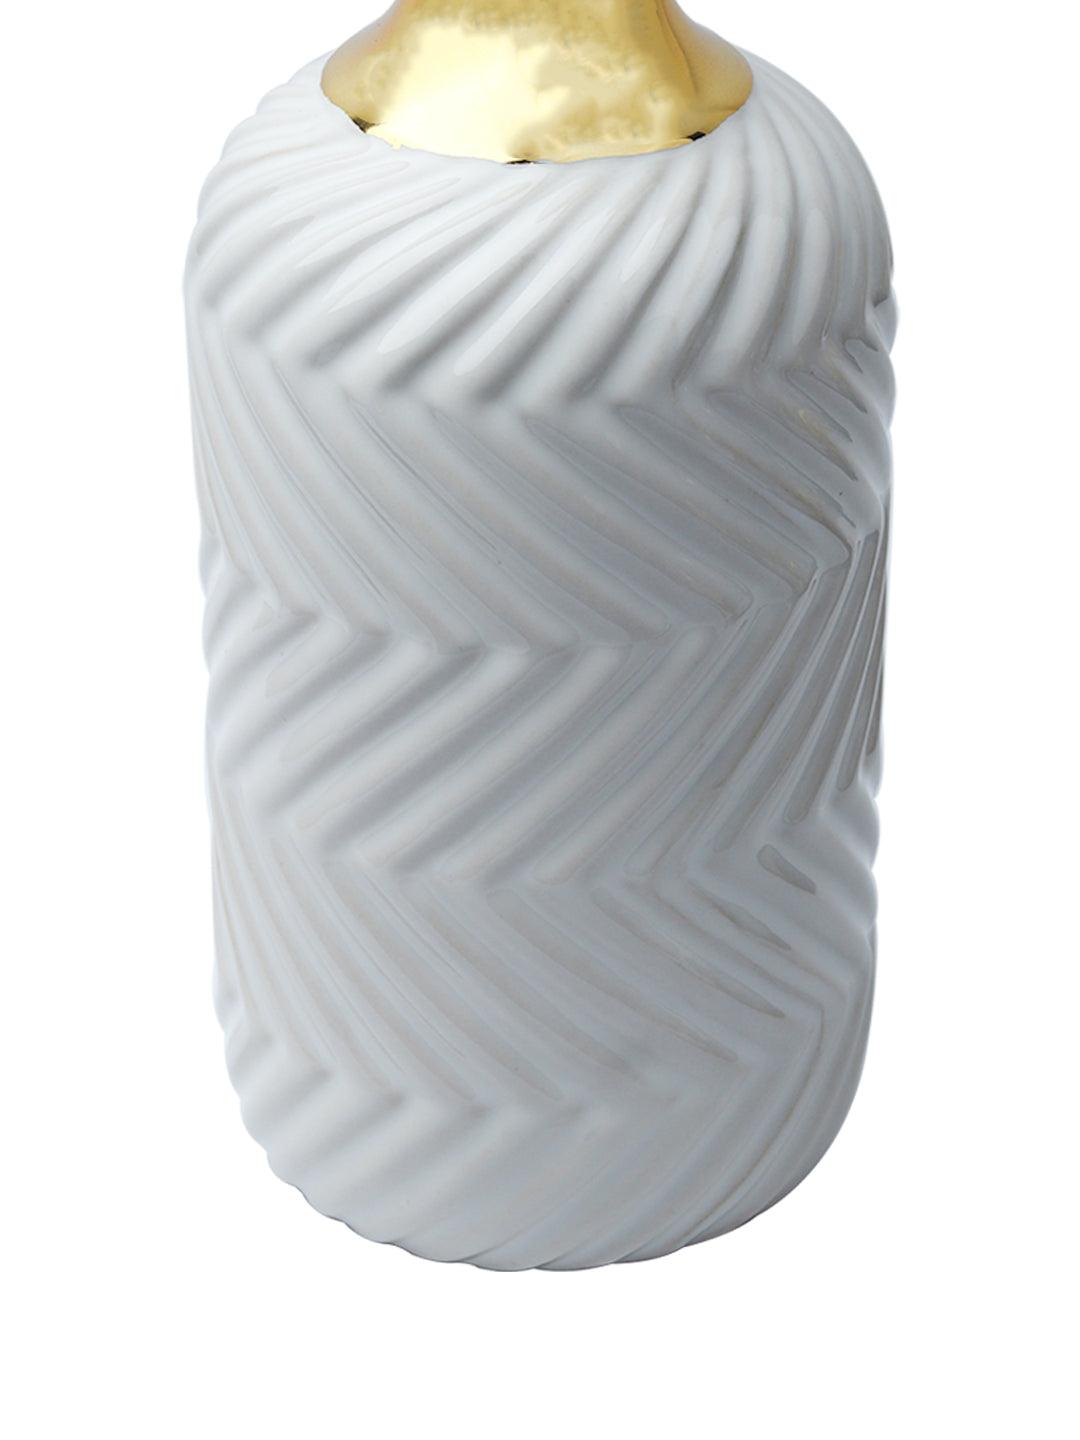 Stylish White Ceramic Vase - MARKET99